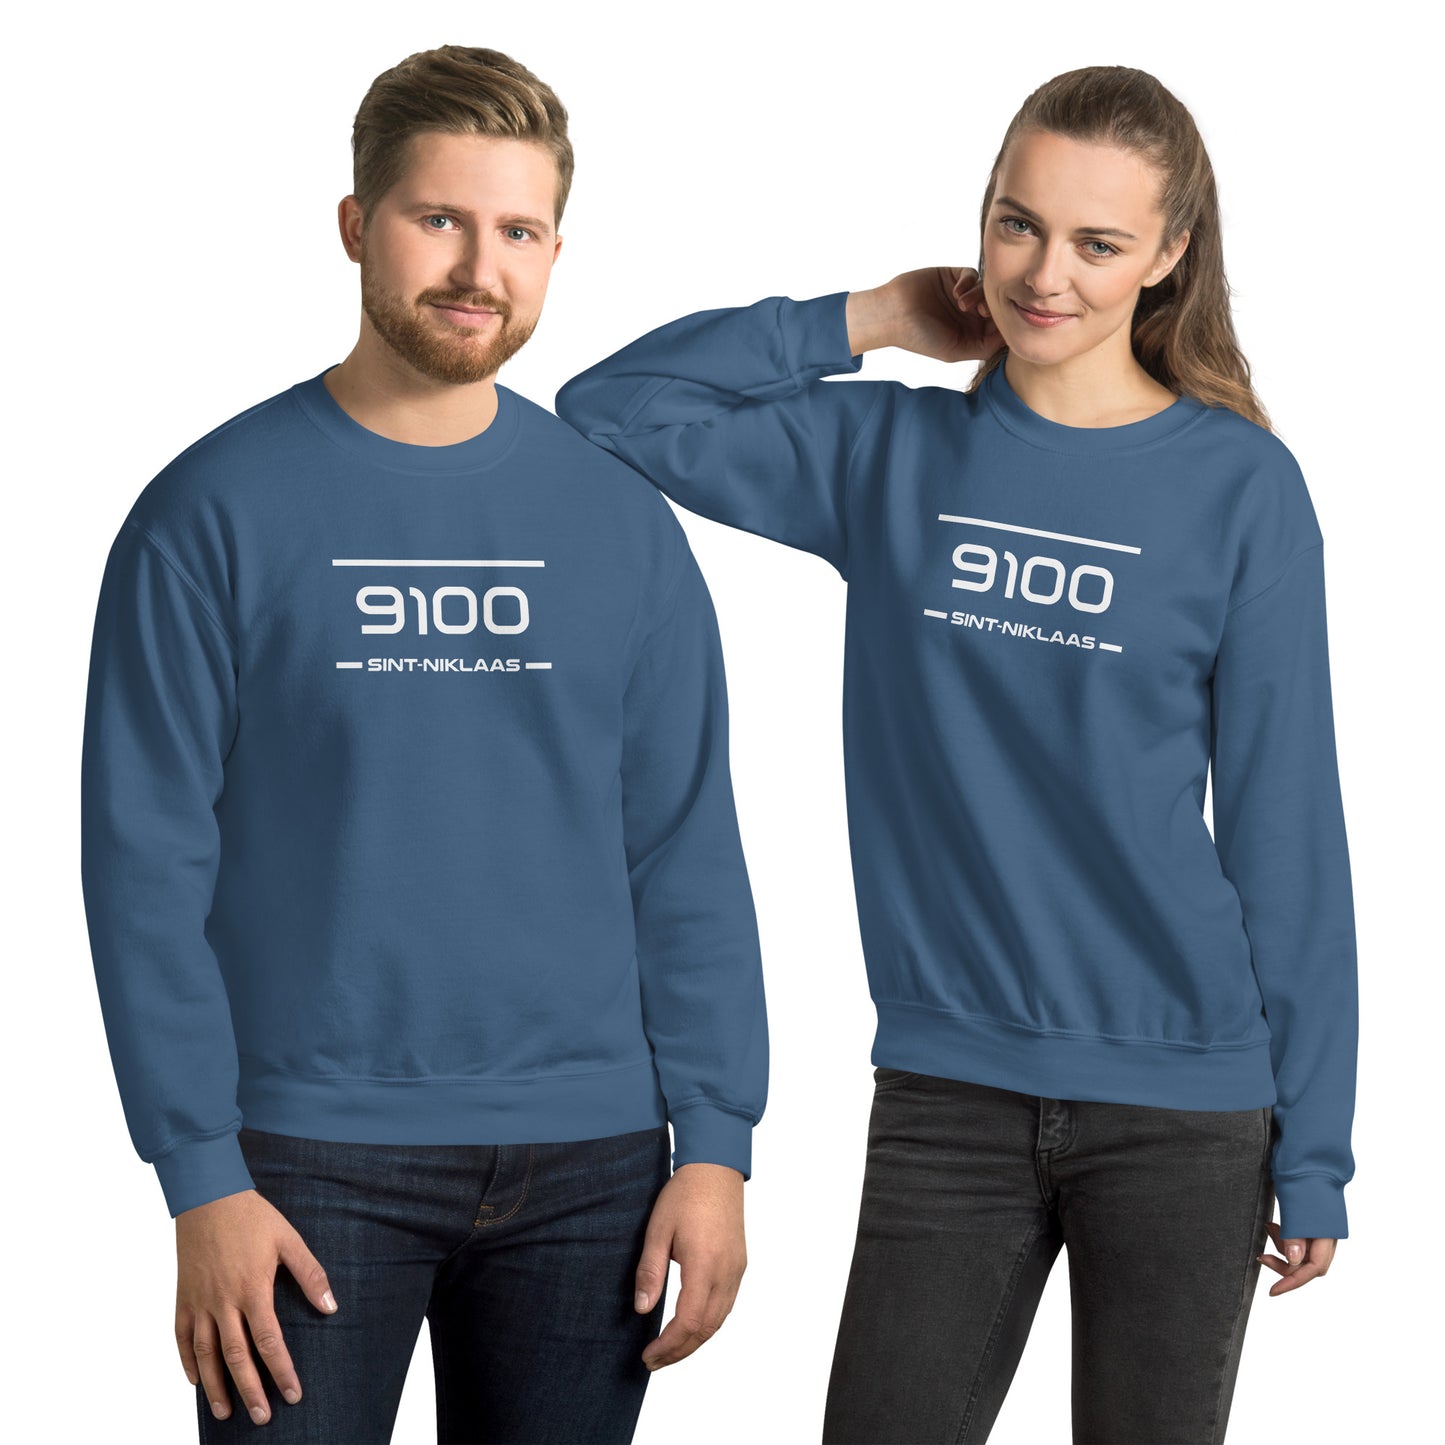 Sweater - 9100 - Sint-Niklaas (M/V)